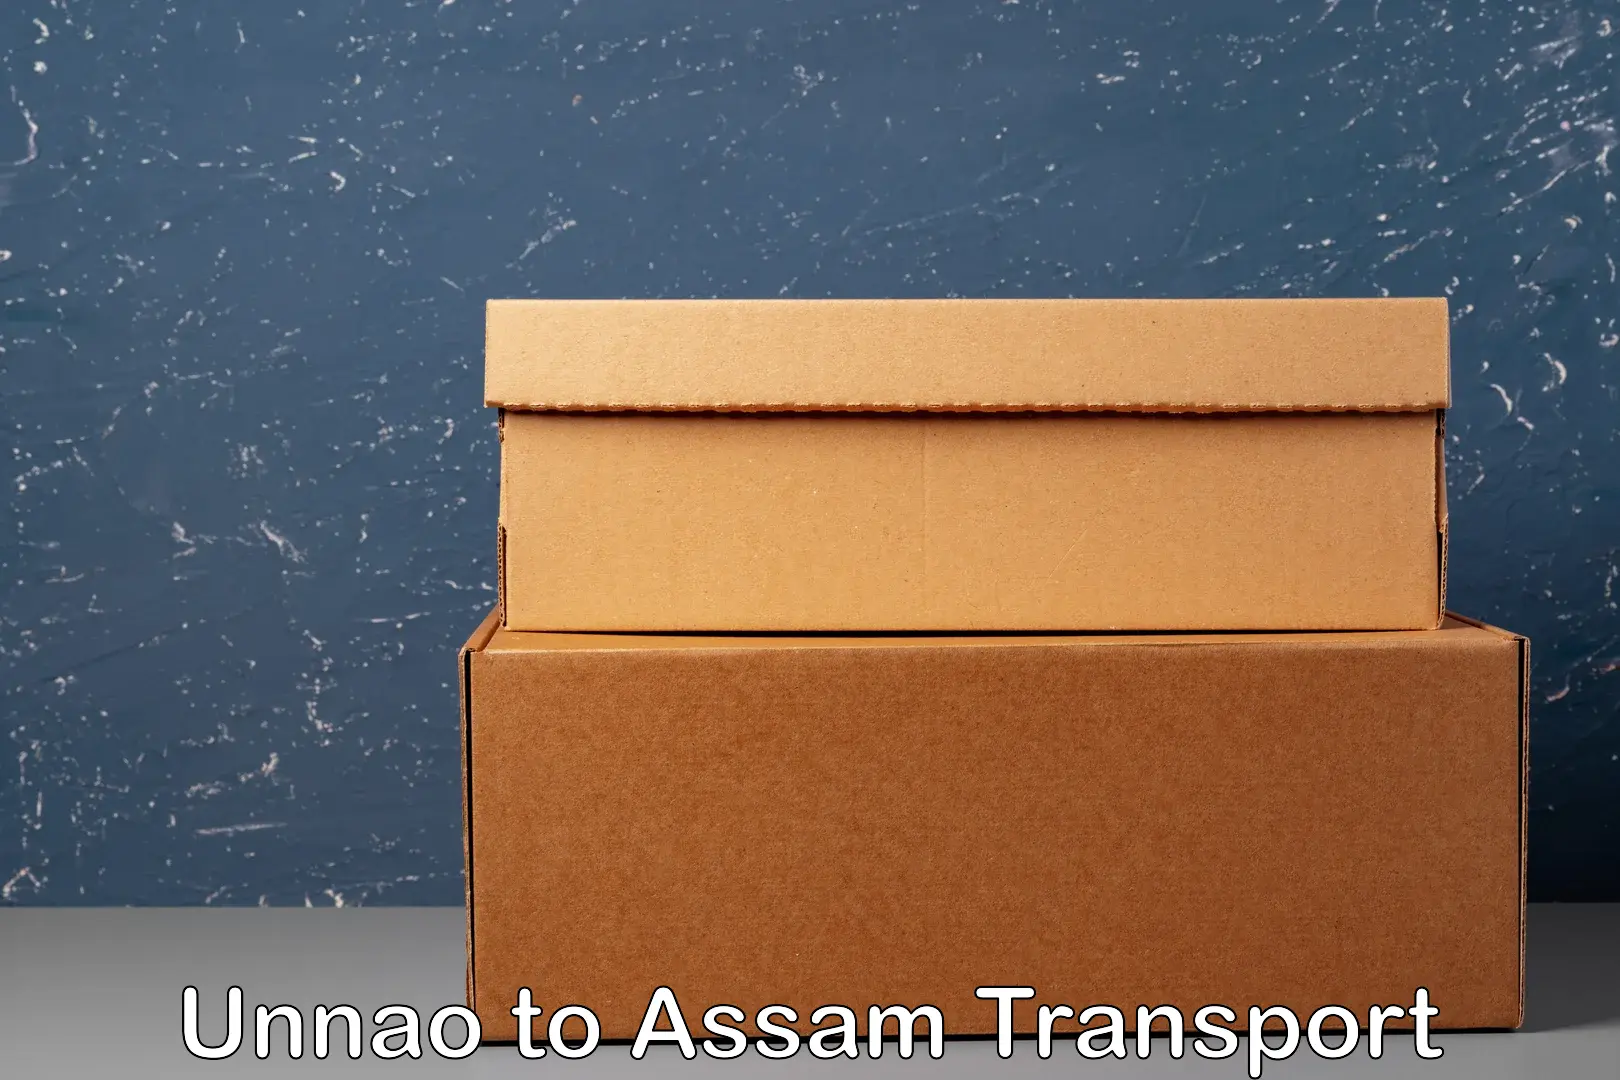 Shipping partner Unnao to Assam